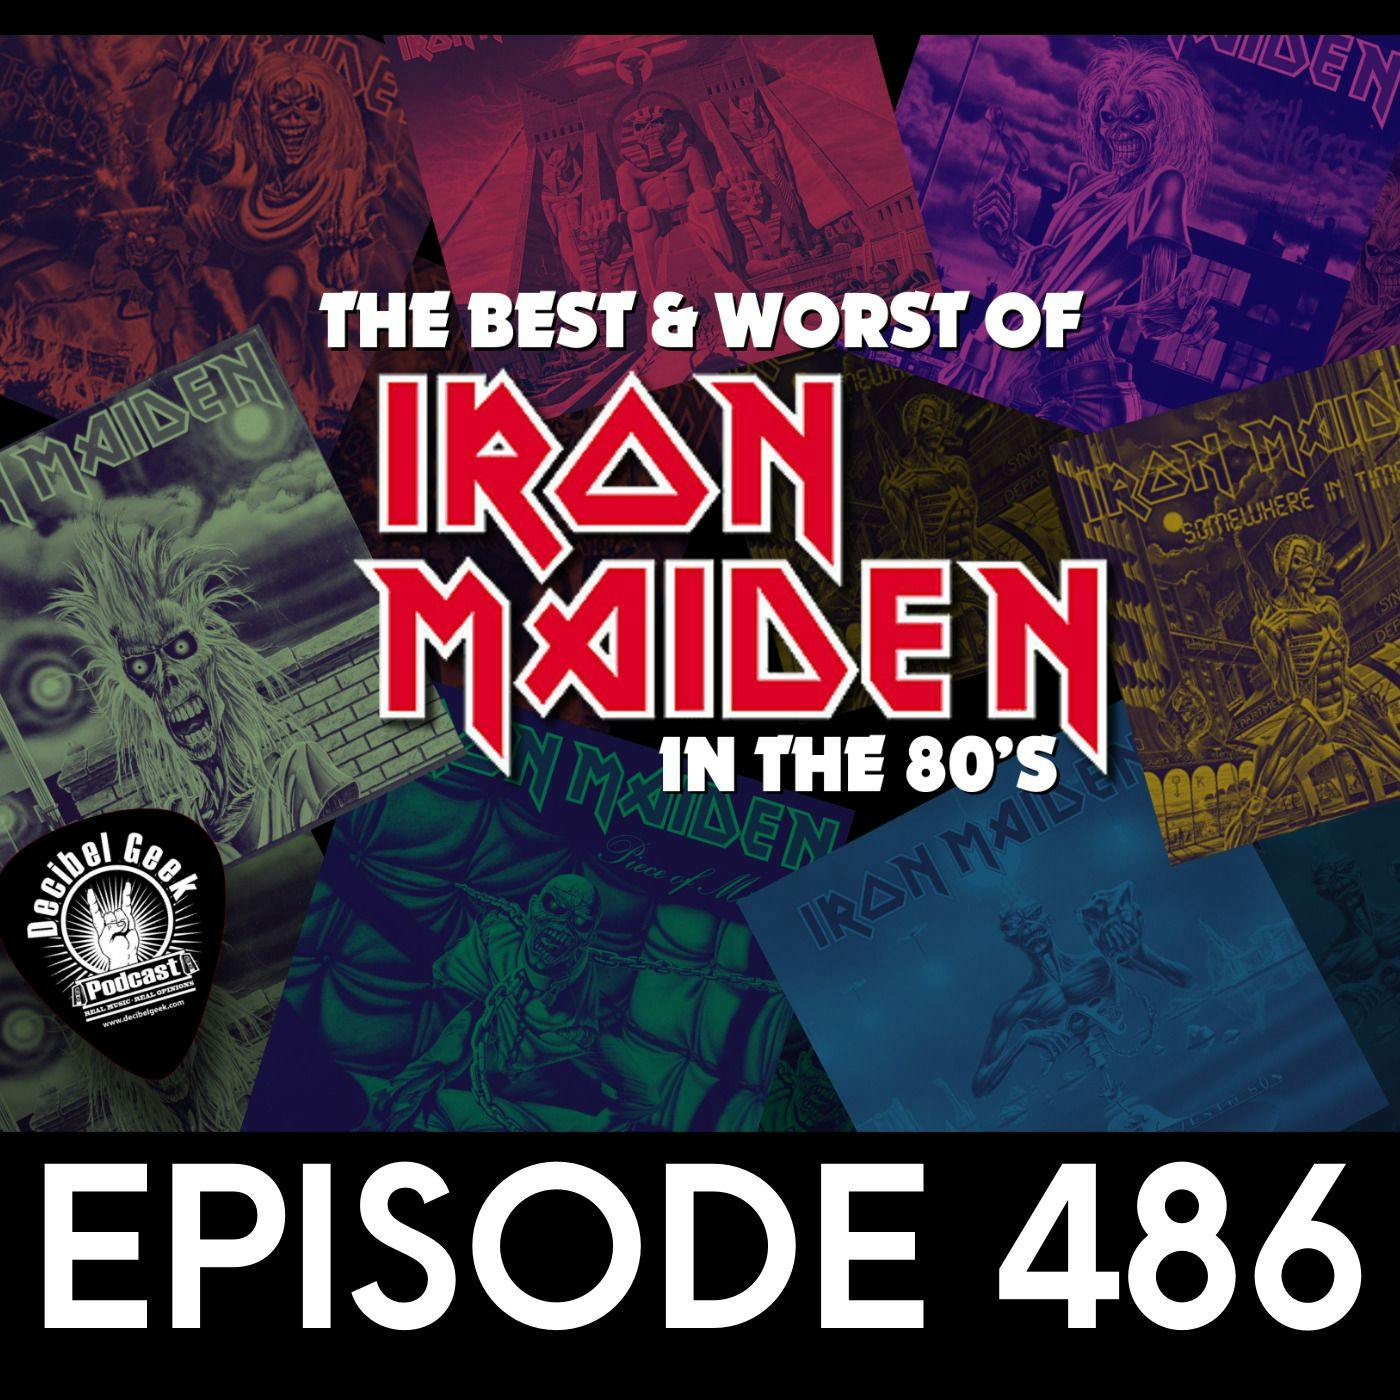 The Best & Worst of 80's Iron Maiden - Ep486